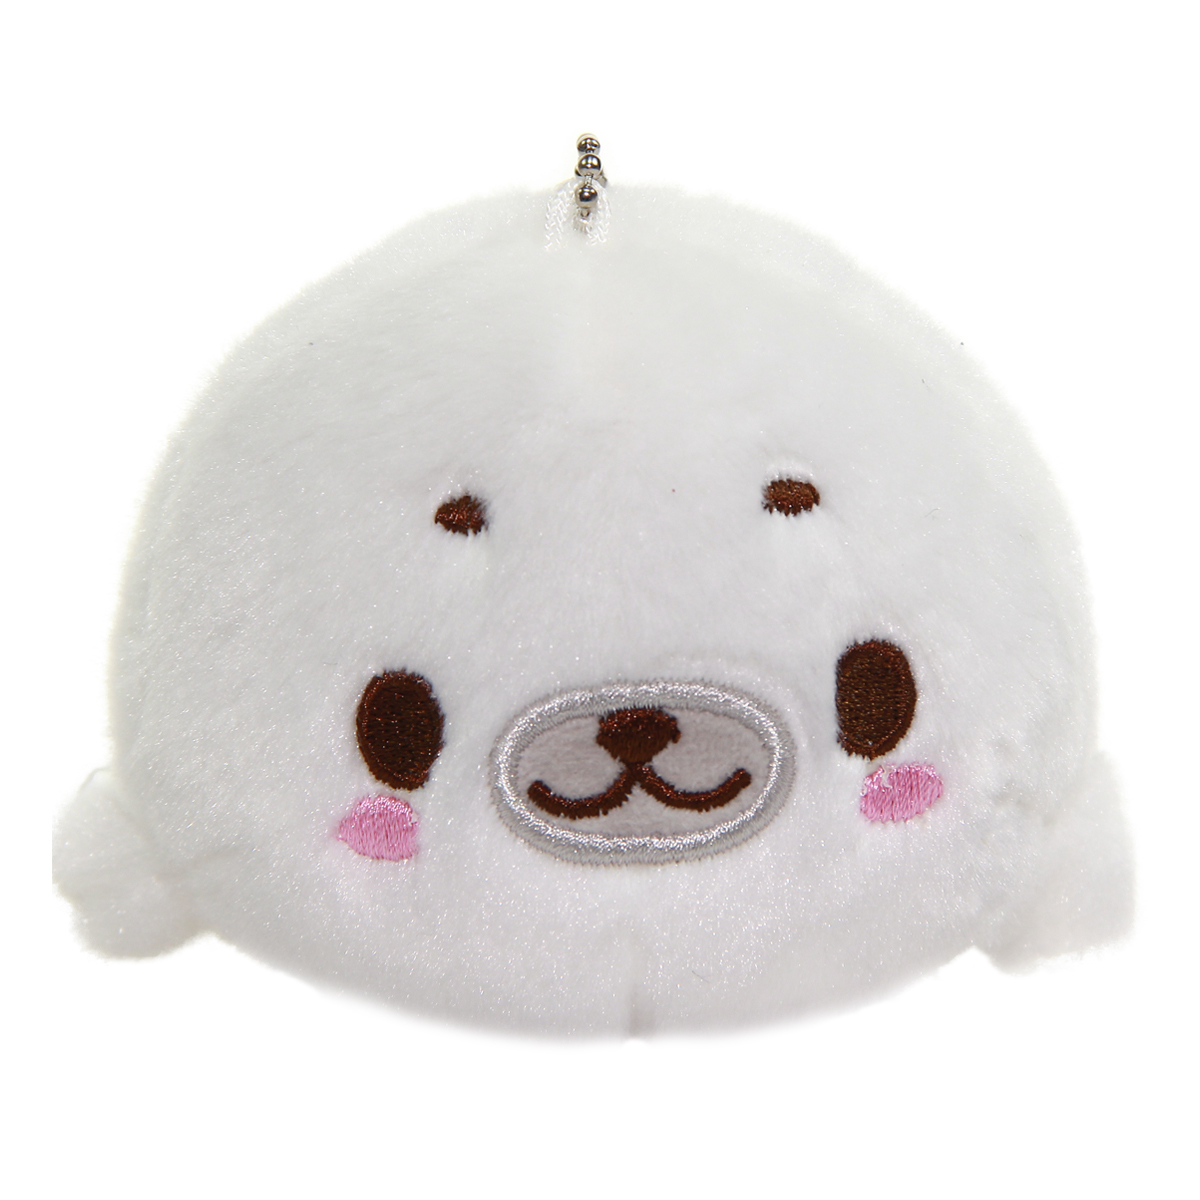 Seal Plush Doll Kawaii Stuffed Animal Soft Fuzzy Squishy Plushie Mochi White